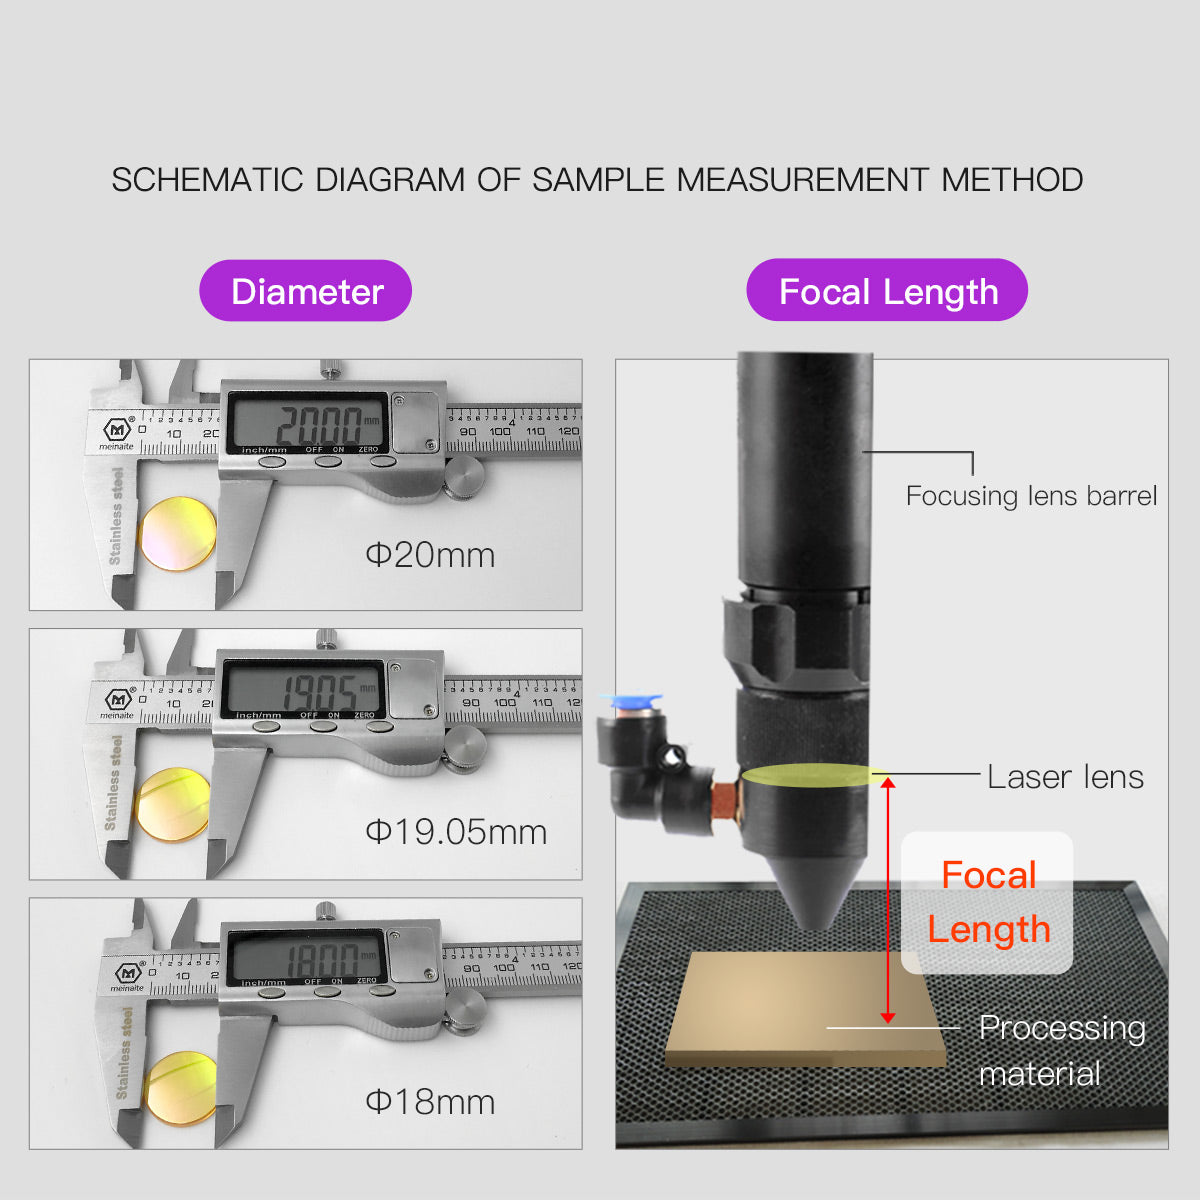 Startnow CO2 Laser Focus Lens China PVD ZnSe 12 18 19.05 20mm F38.1 50.8 63.5 76.2